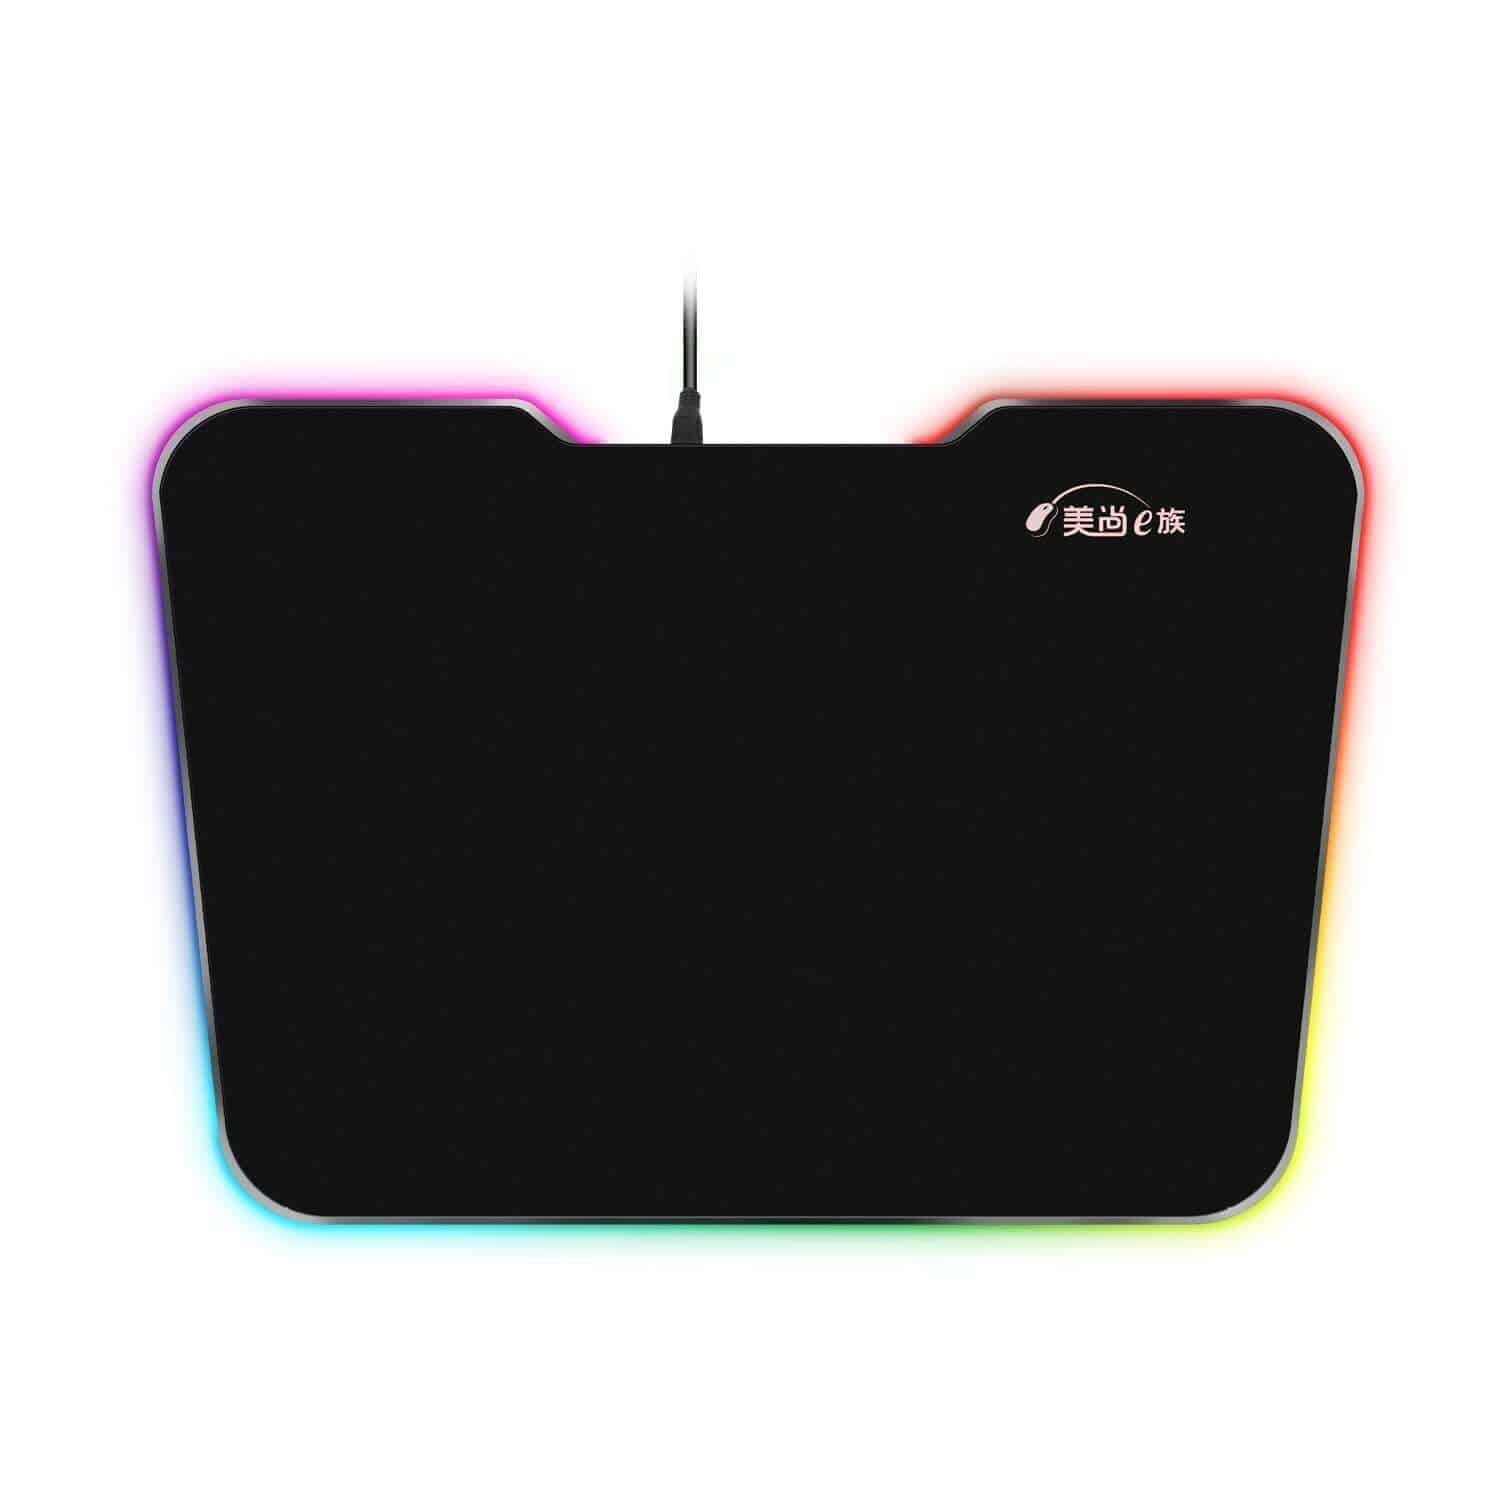 HAVIT HV-MP851 RGB Mouse Pad with 7 Adjustable LED Color Modes